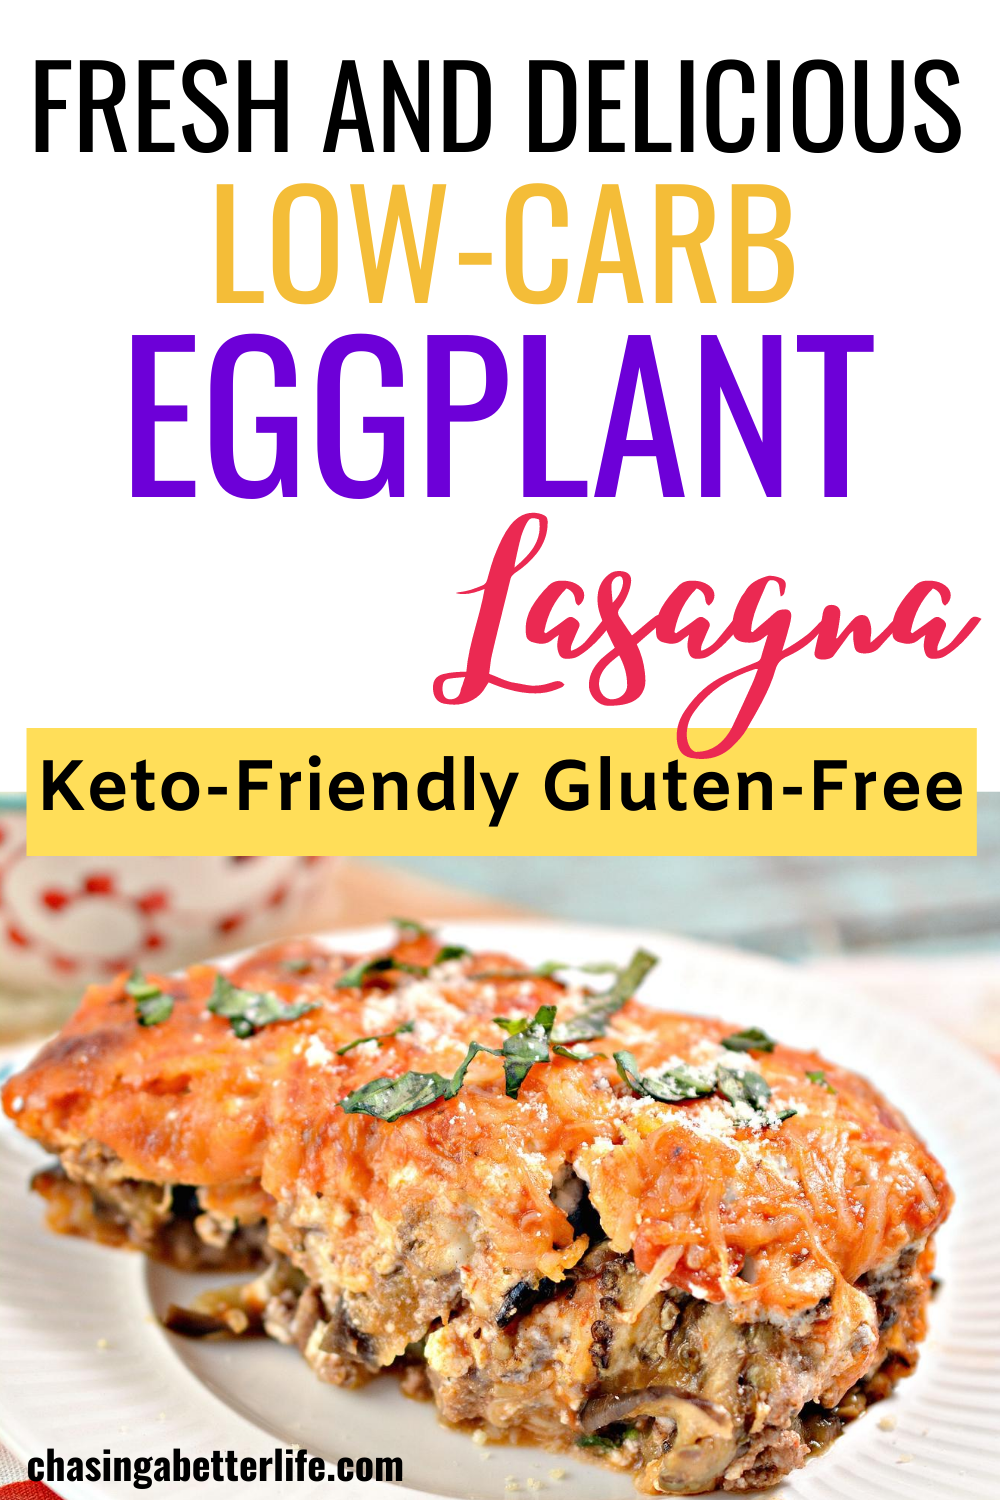 Fresh & Delicious Low-Carb Eggplant Lasagna | Keto-Friendly, Gluten-Free 8